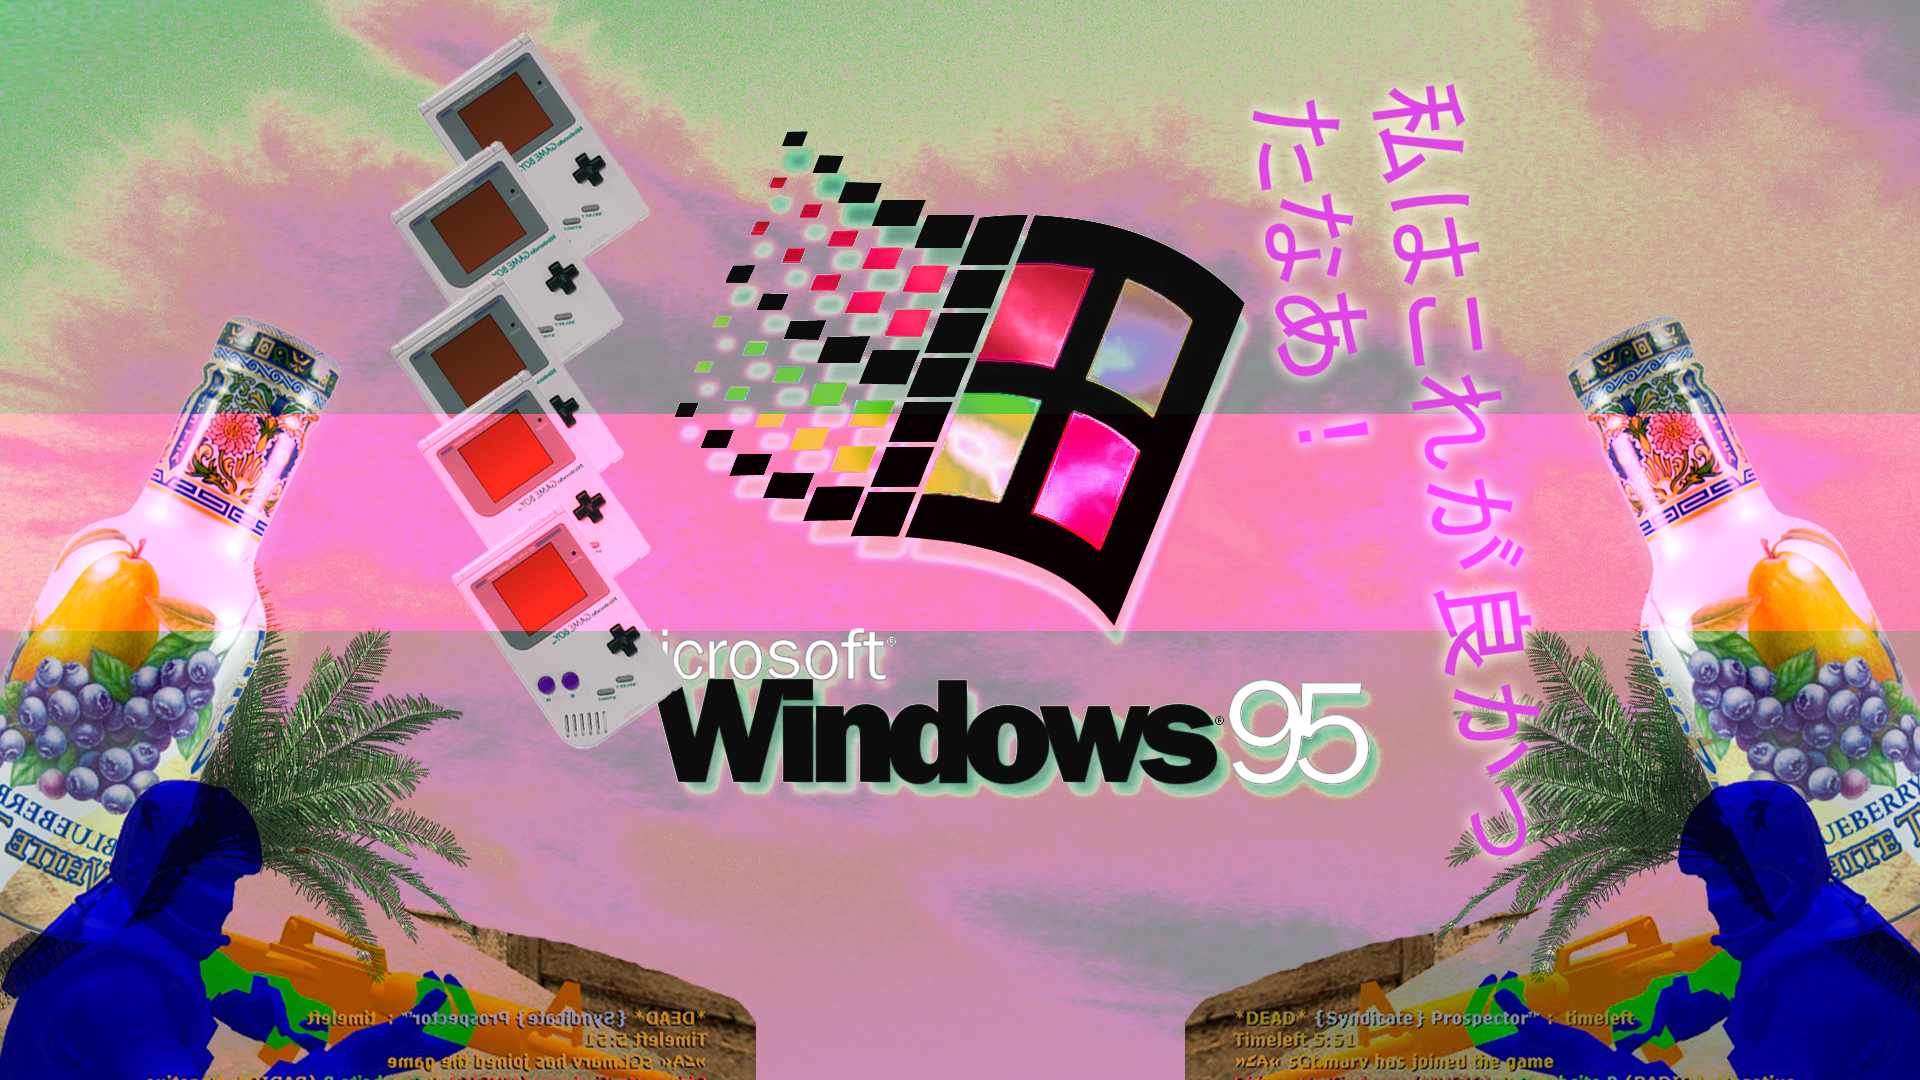 General 1920x1080 vaporwave synthwave Windows 95 computer